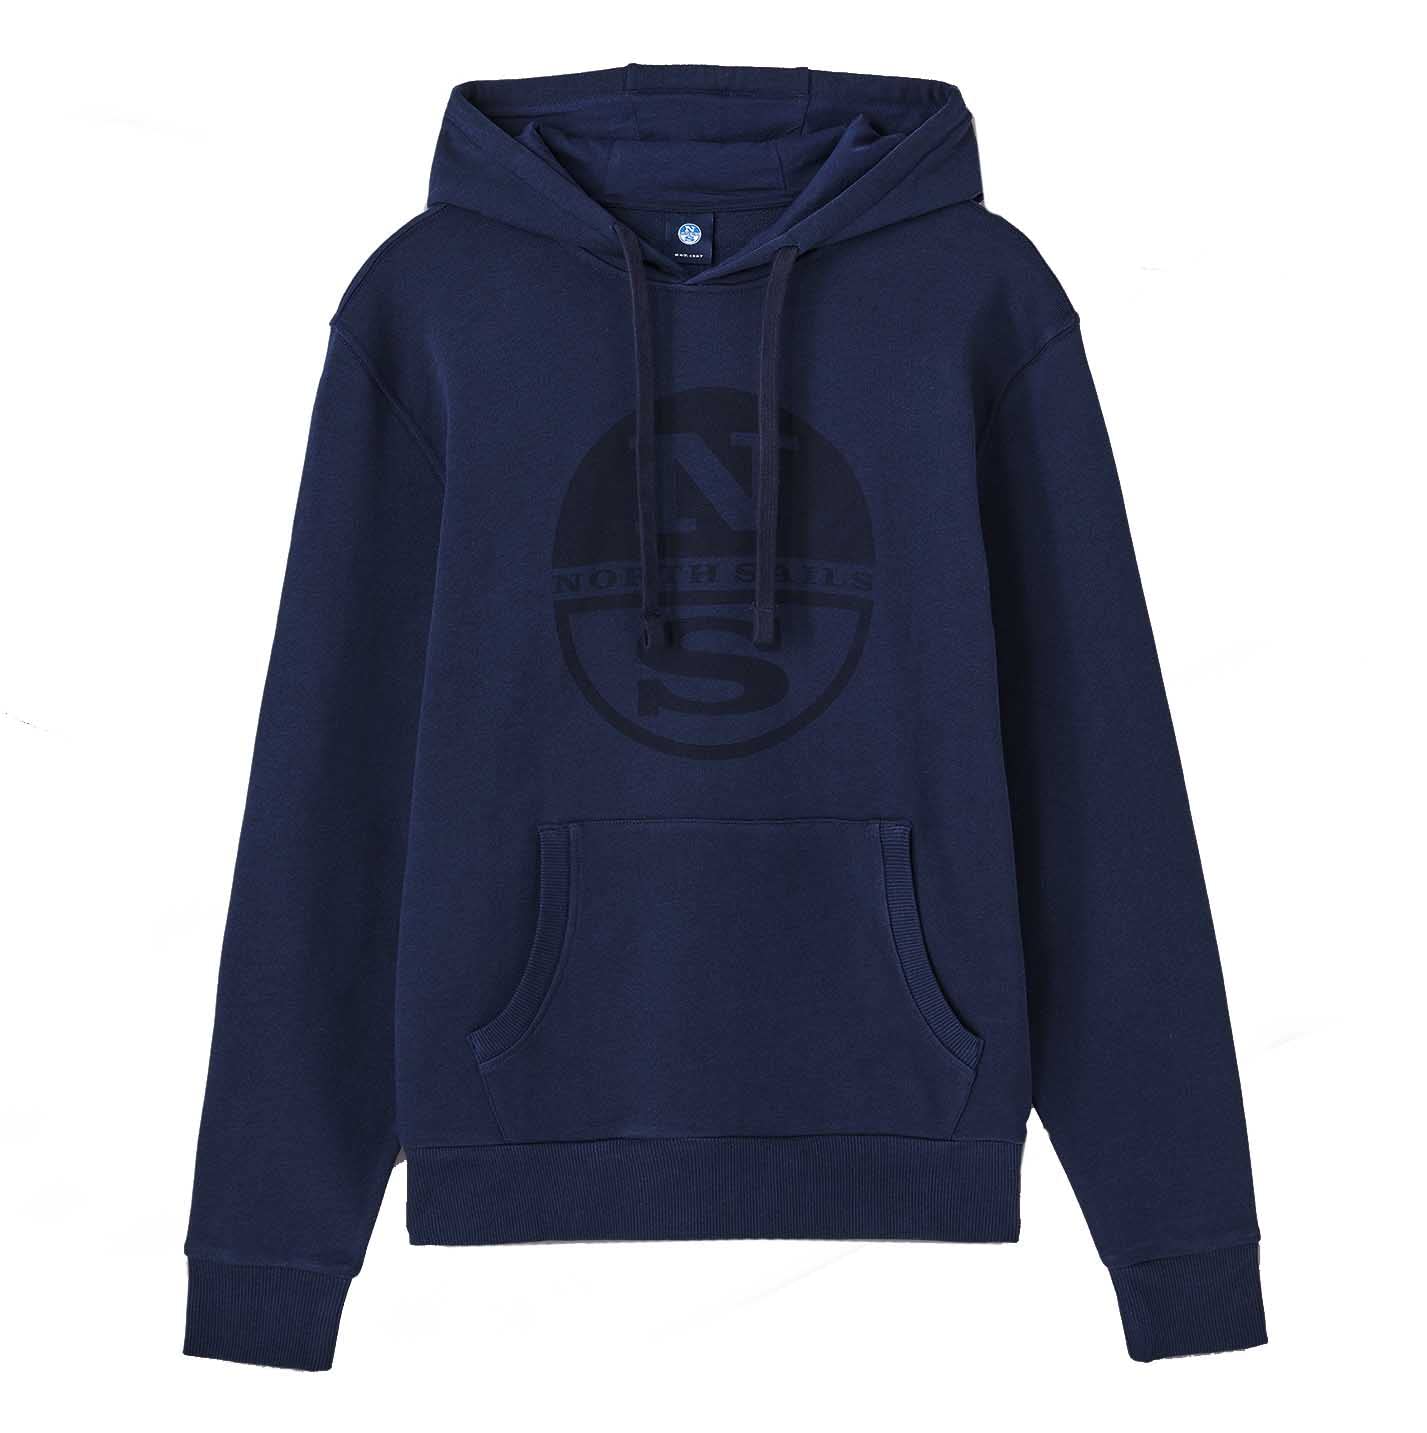 NORTH SAILS - Men's regular logo hoodie - Size XL